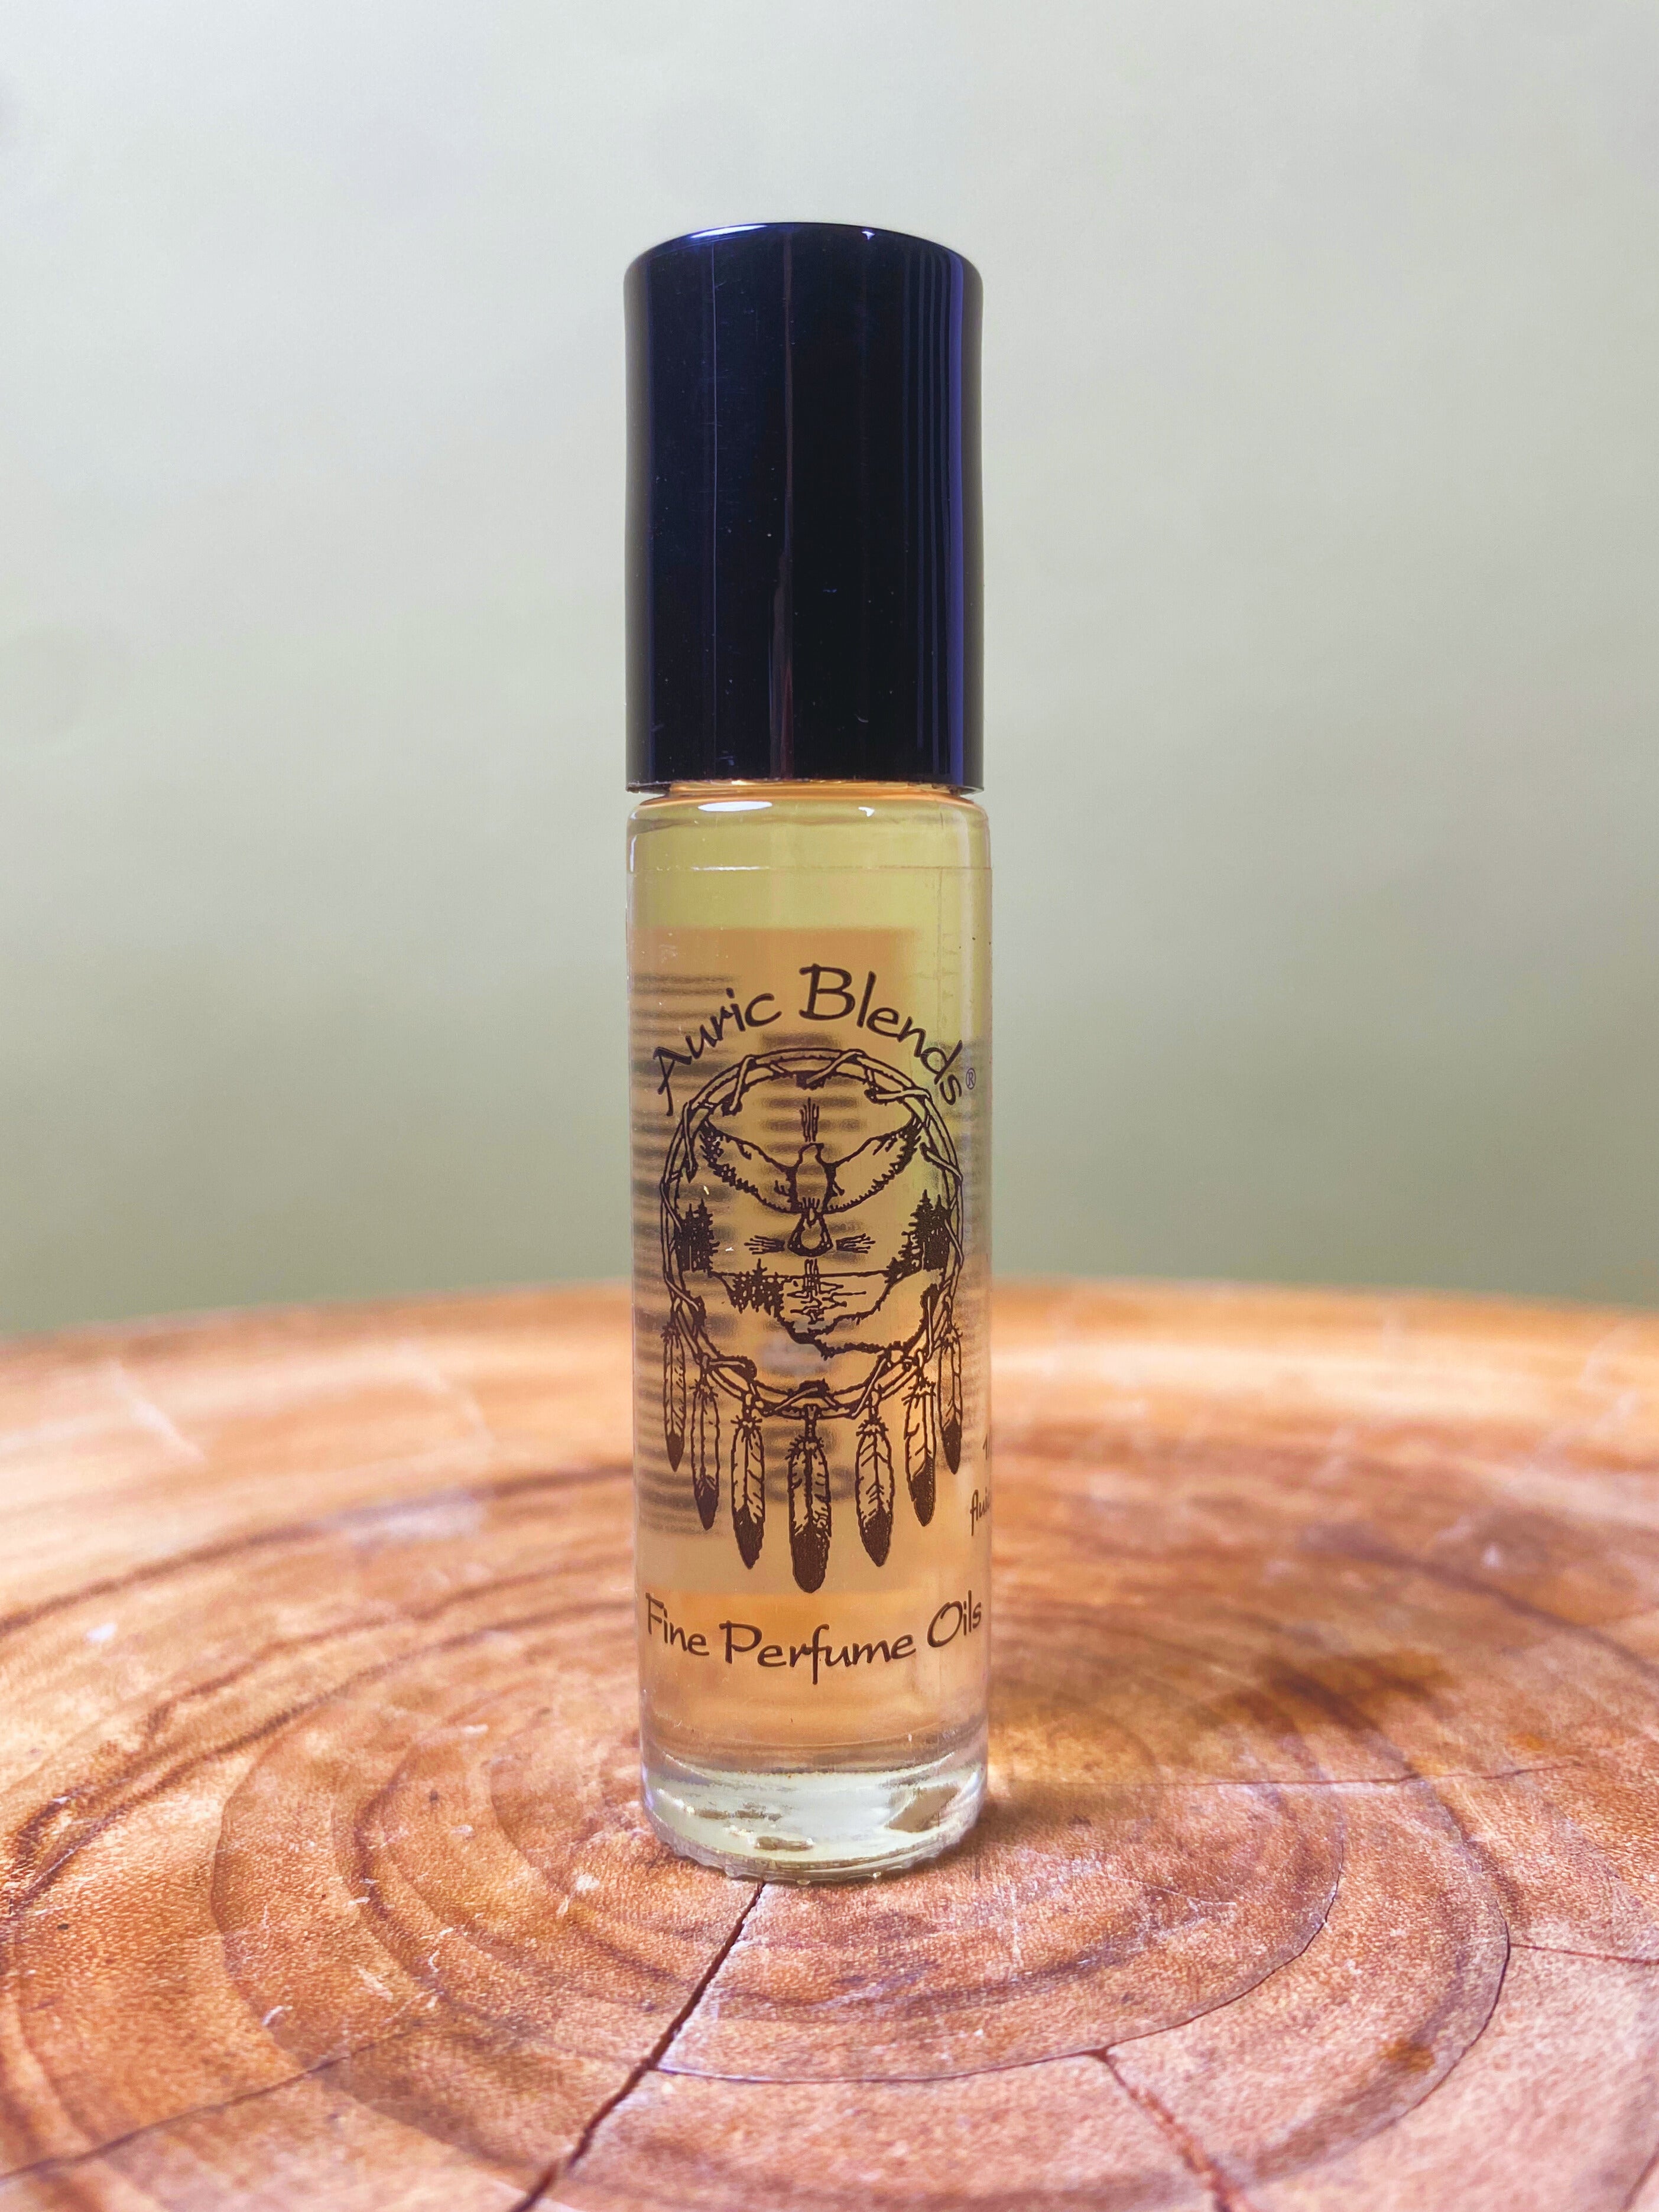 Vanilla Rain Roll-on Perfume Oil | 0.33 fl oz